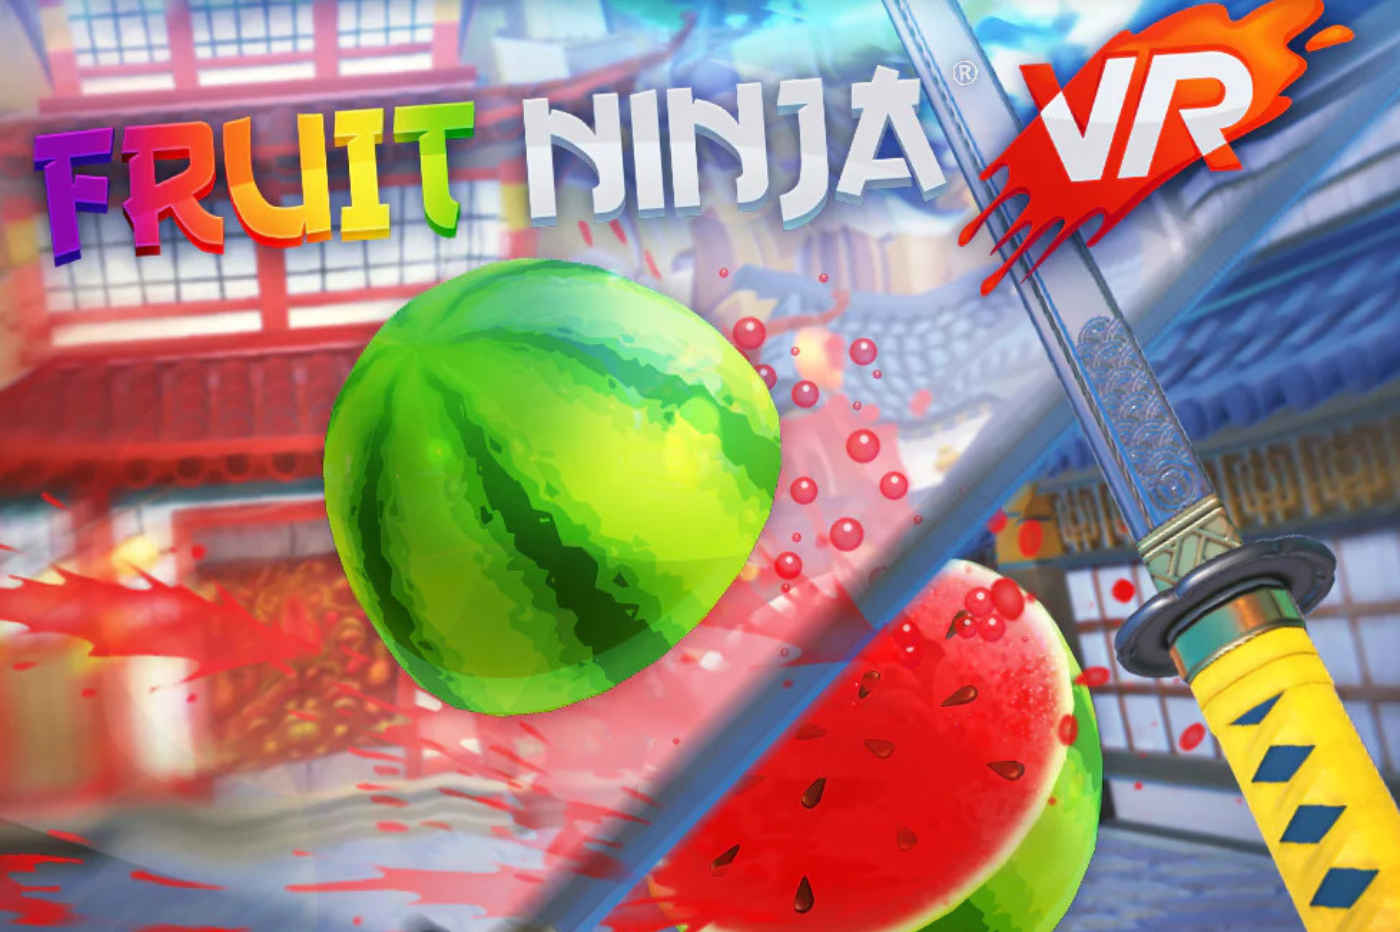 fruit ninja